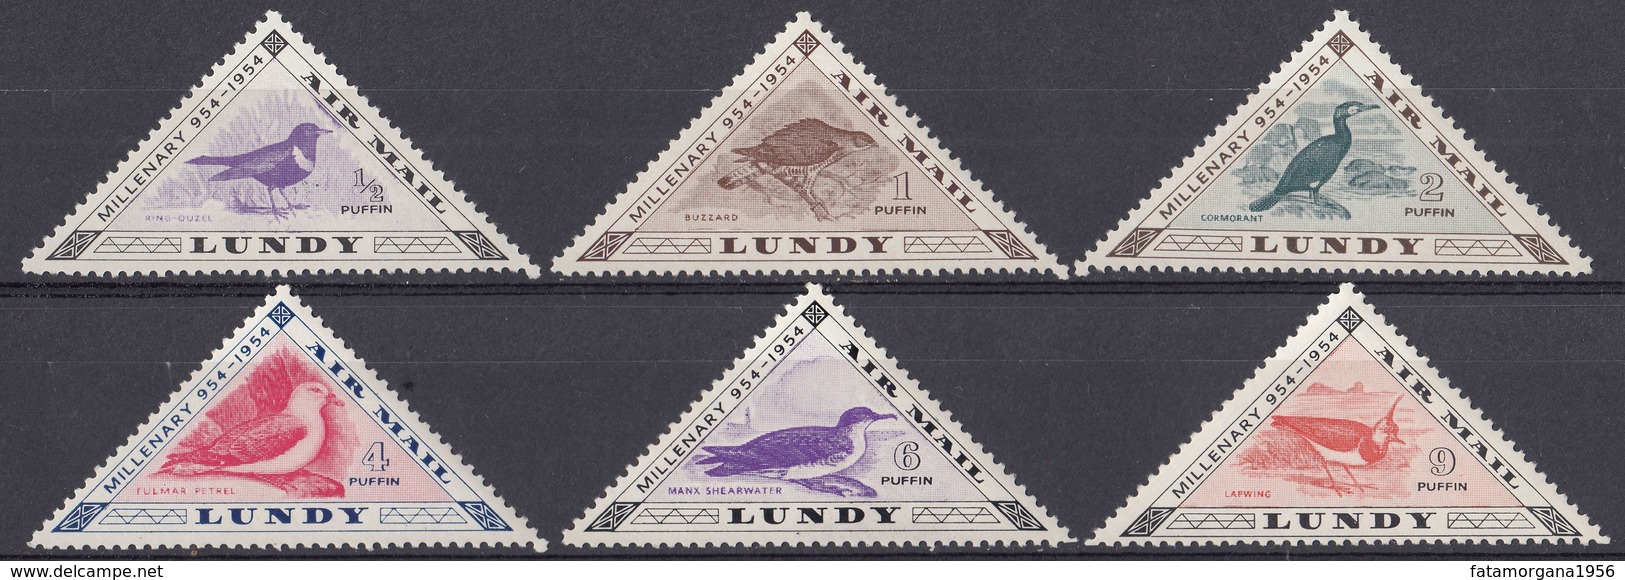 LUNDY - 1954 - Serie Di 6 Valori Nuovi MNH, Posta Aerea, Raffiguranti Uccelli. - Ortsausgaben